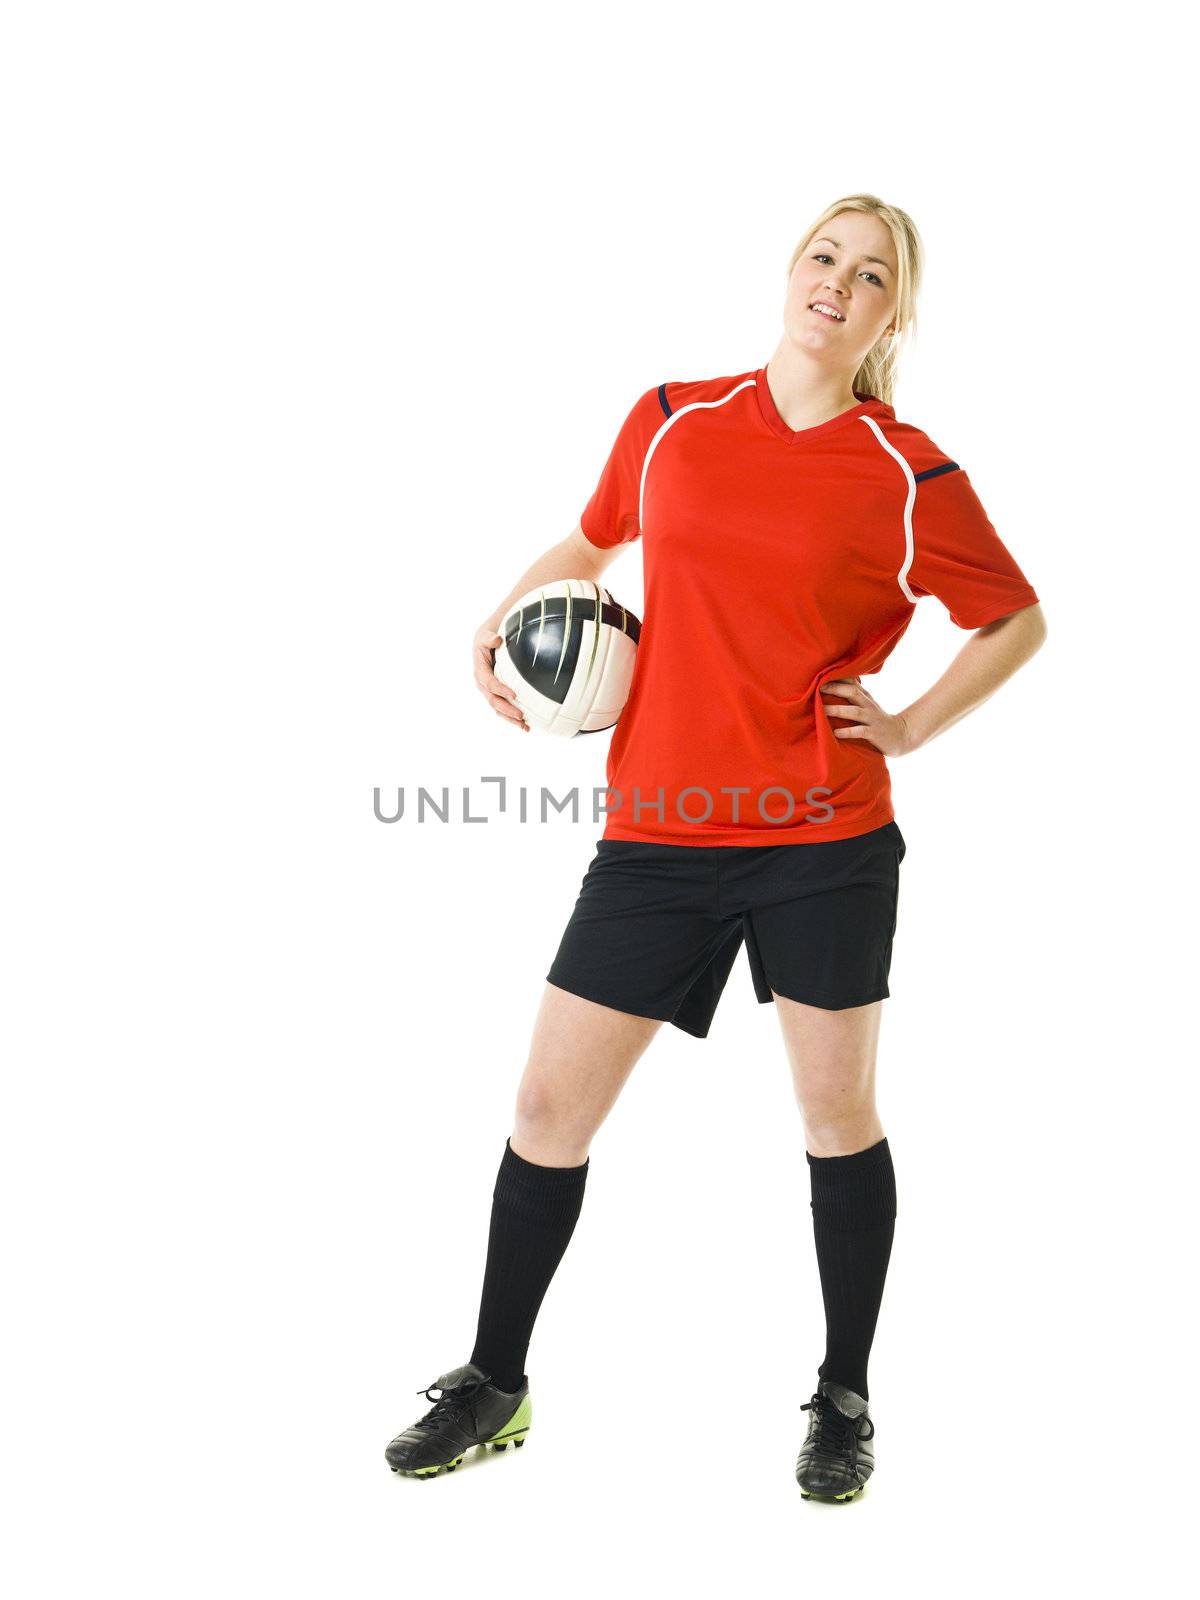 Soccer Woman by gemenacom